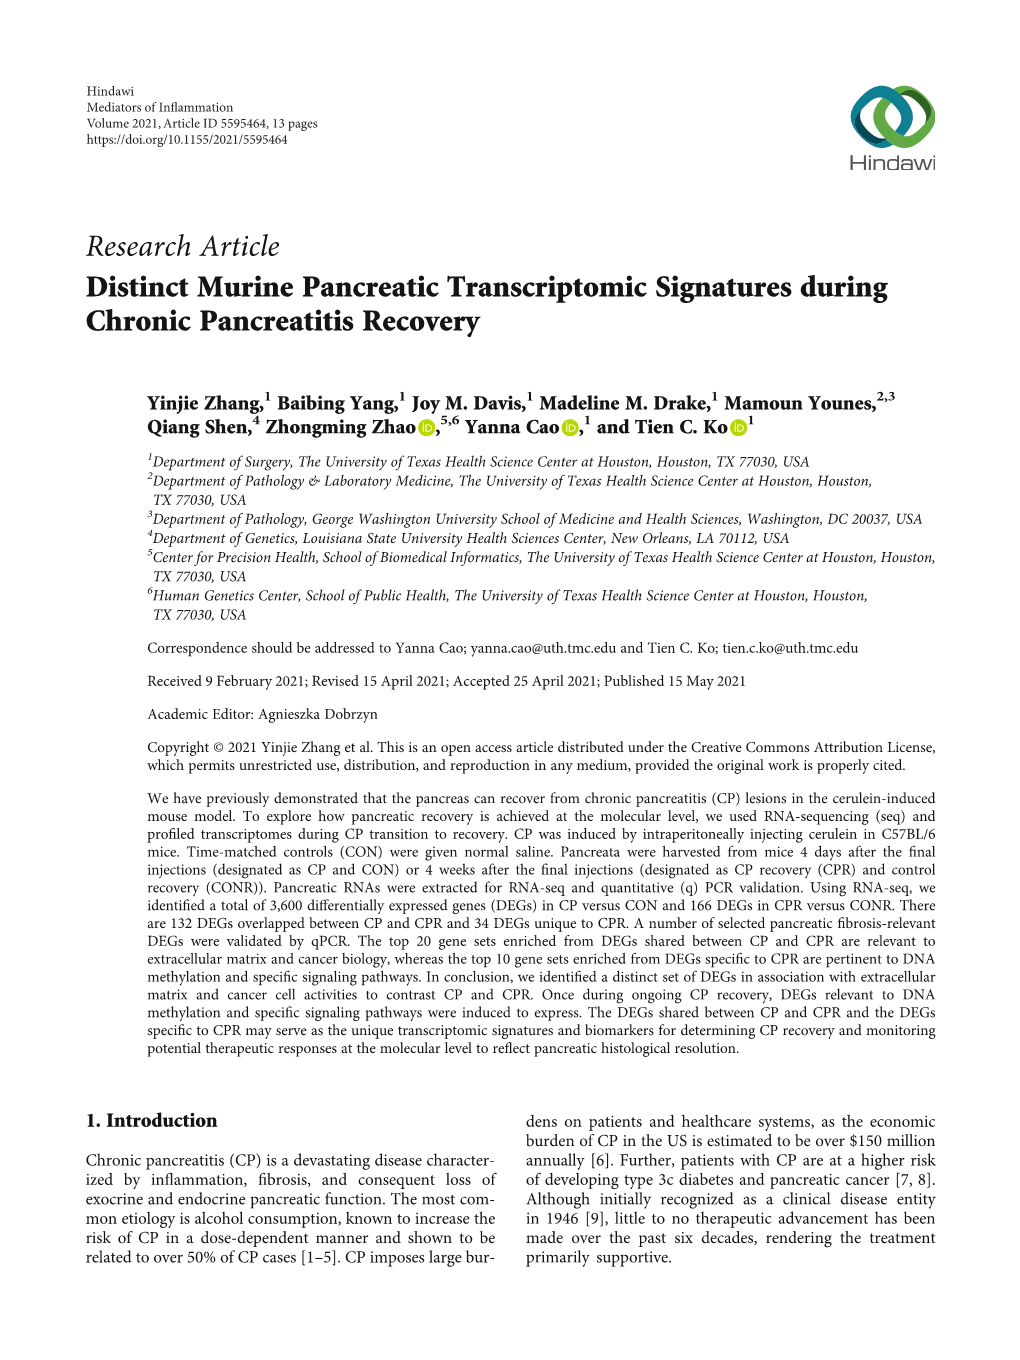 Distinct Murine Pancreatic Transcriptomic Signatures During Chronic Pancreatitis Recovery